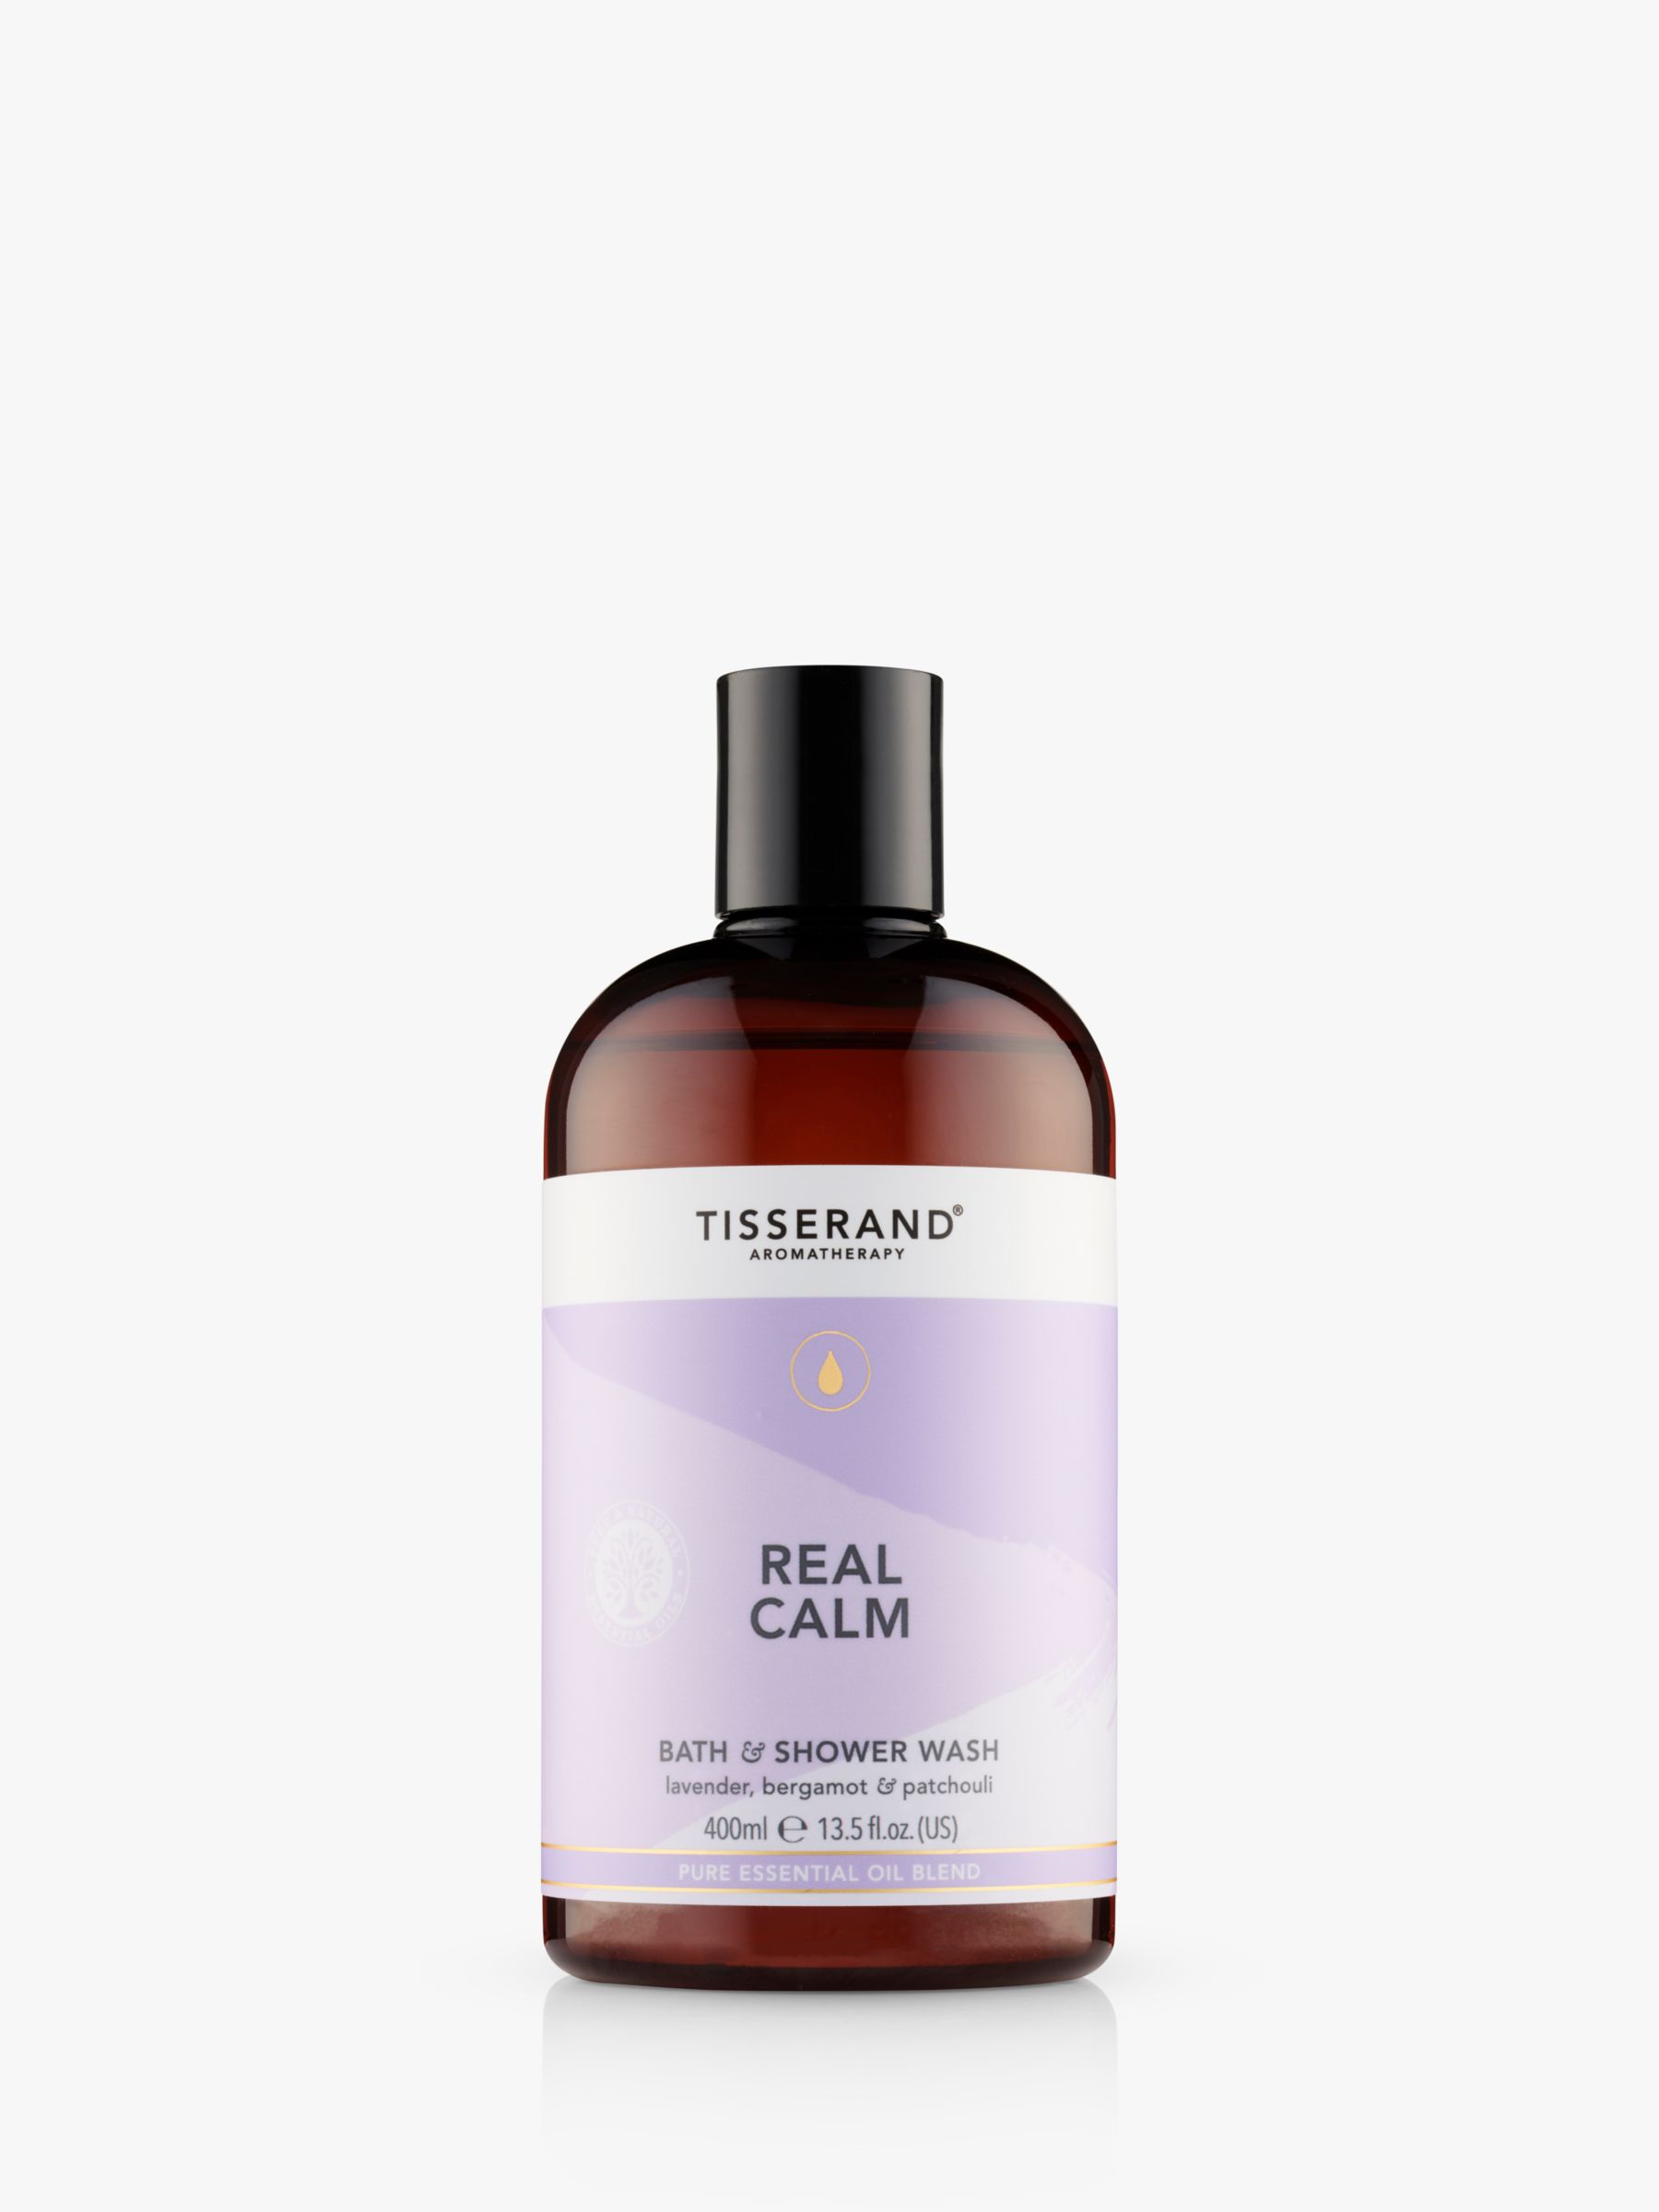 Tisserand Aromatherapy Real Calm Bath & Shower Wash, 400ml 2